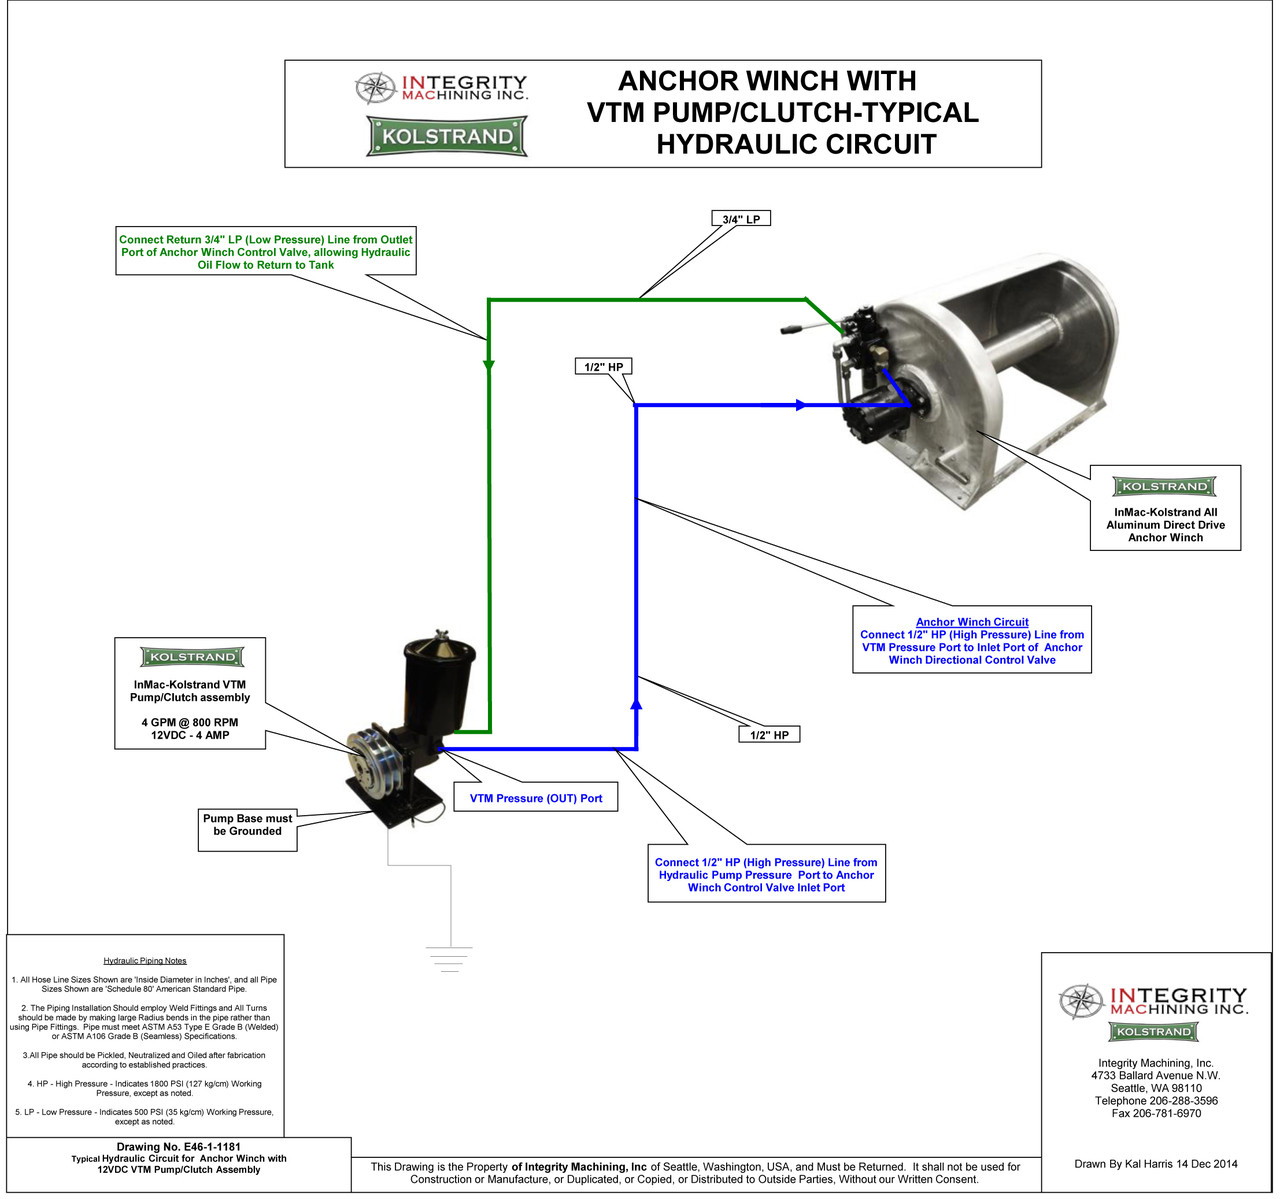 Typical Anchor Winch Hydraulic Circuit